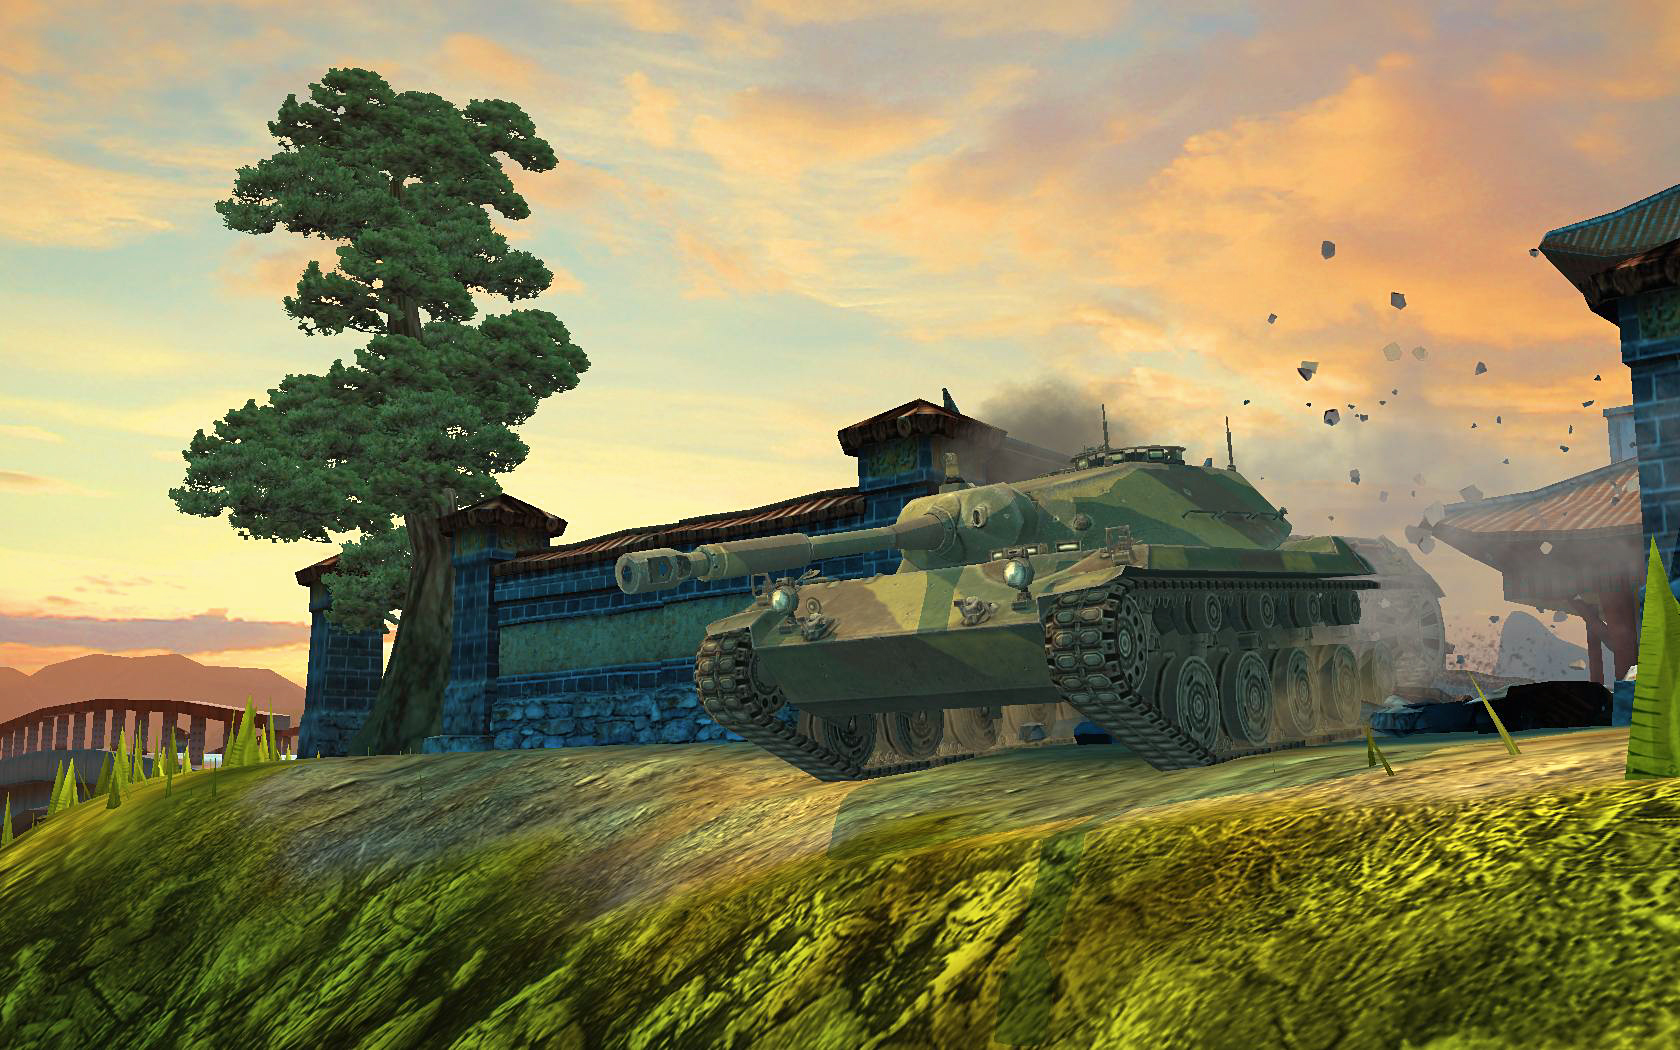 world of tanks blitz pc download free